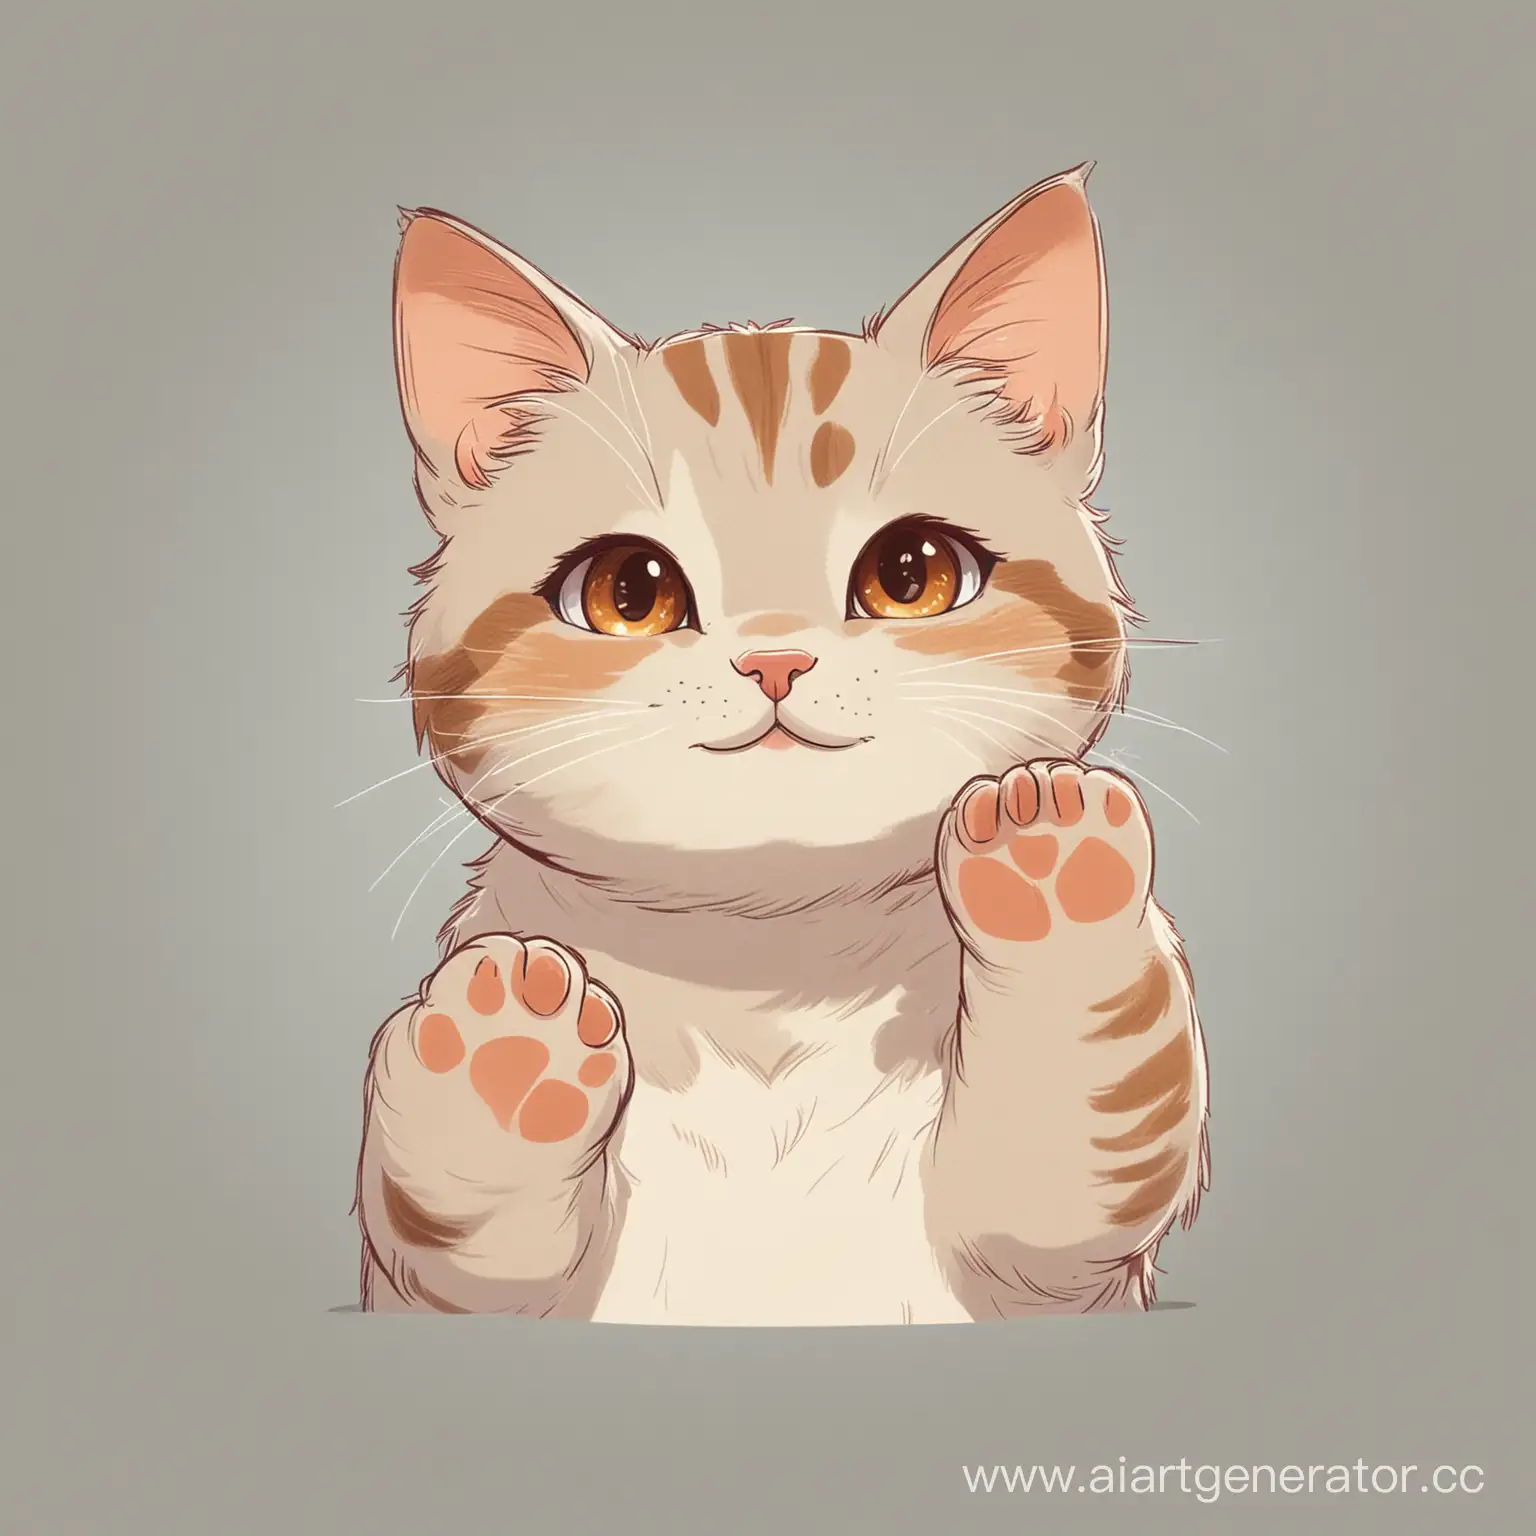 Cheerful-WaistUp-Cat-with-Paw-Raised